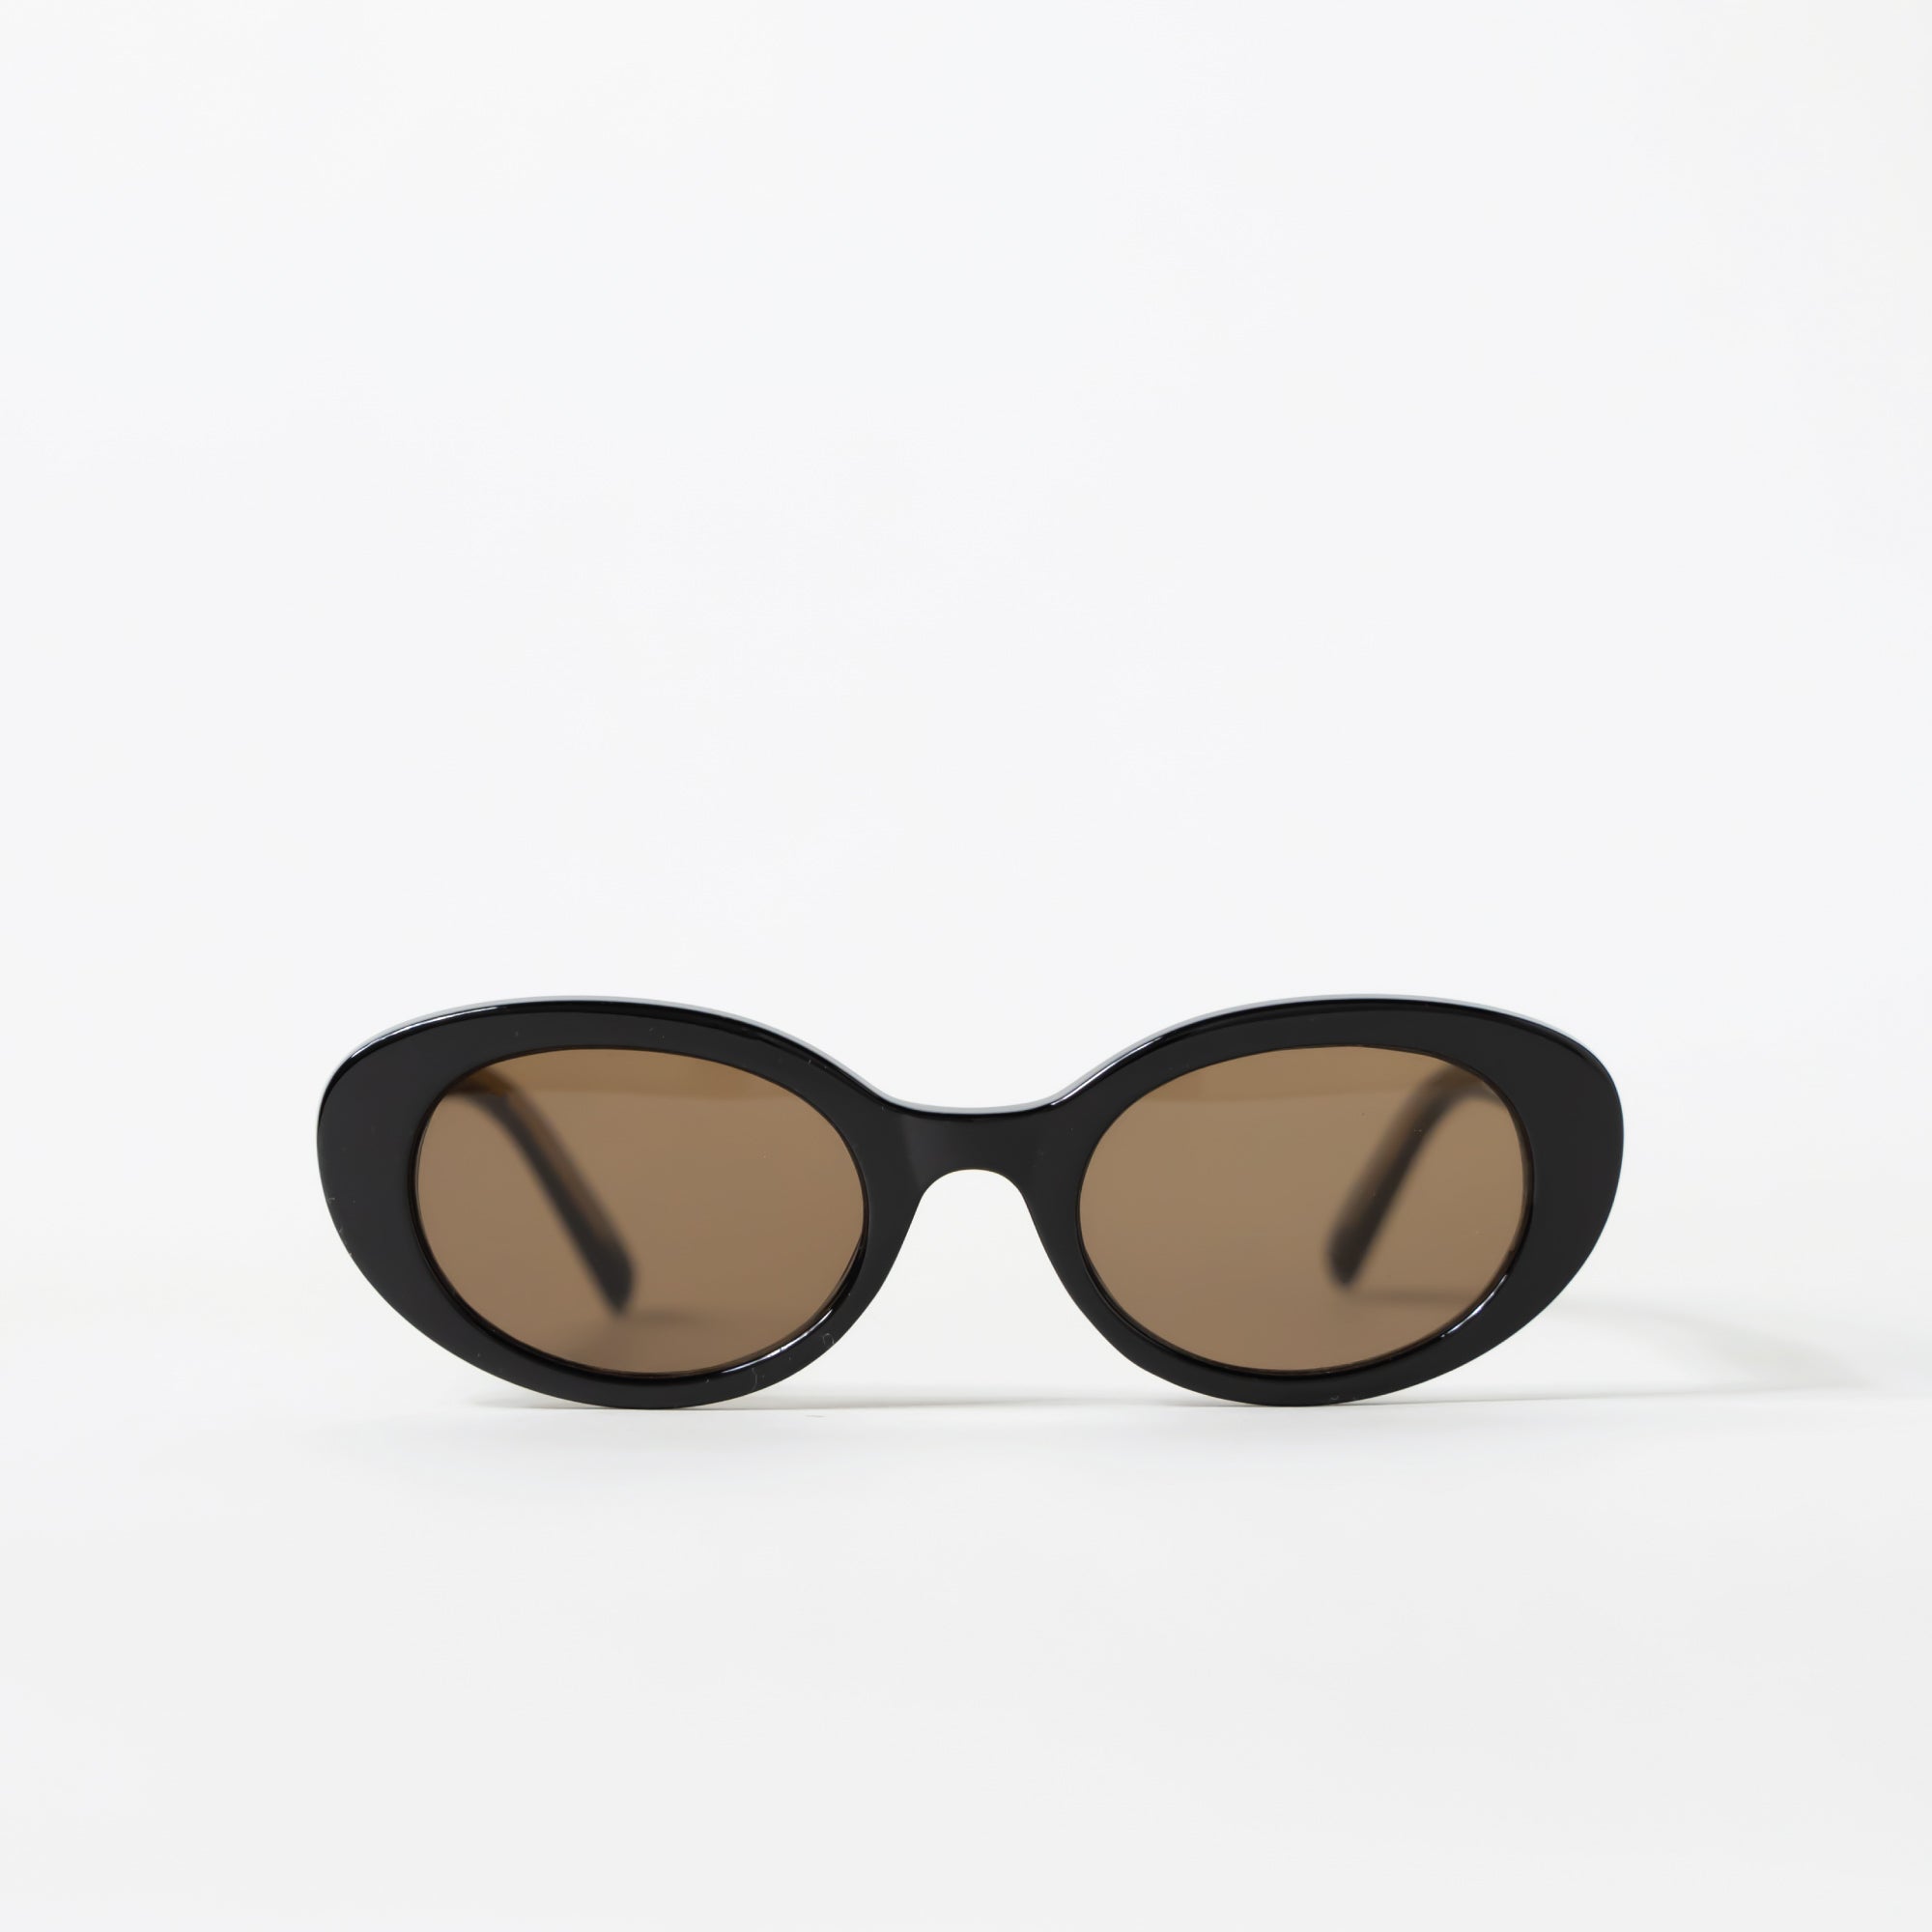 Brown Tint Black Frame Round Eye Sunglasses